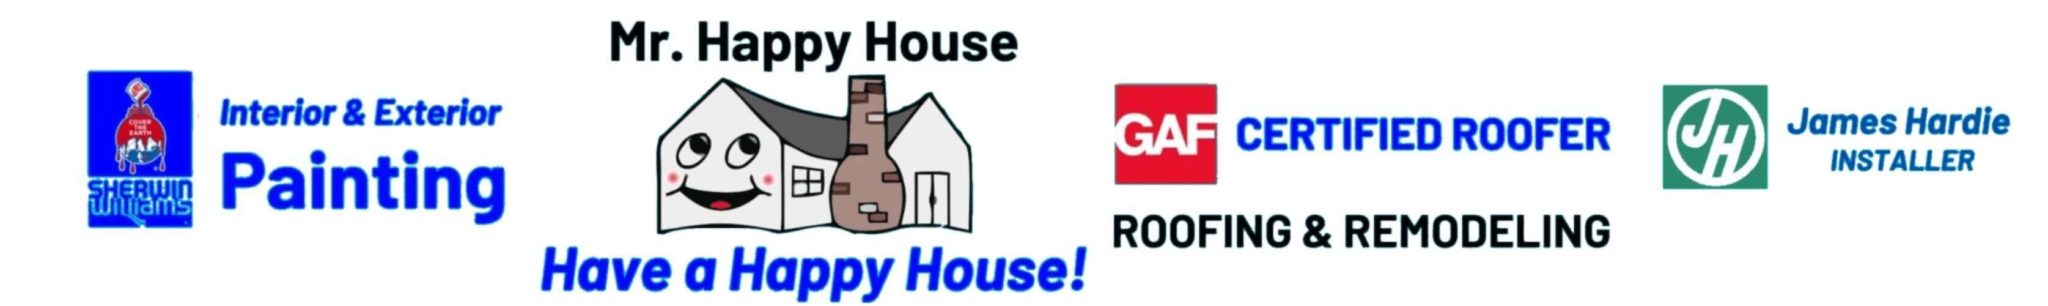 Mr.-Happy-House-desktoplogo-Roofing-siding-painting